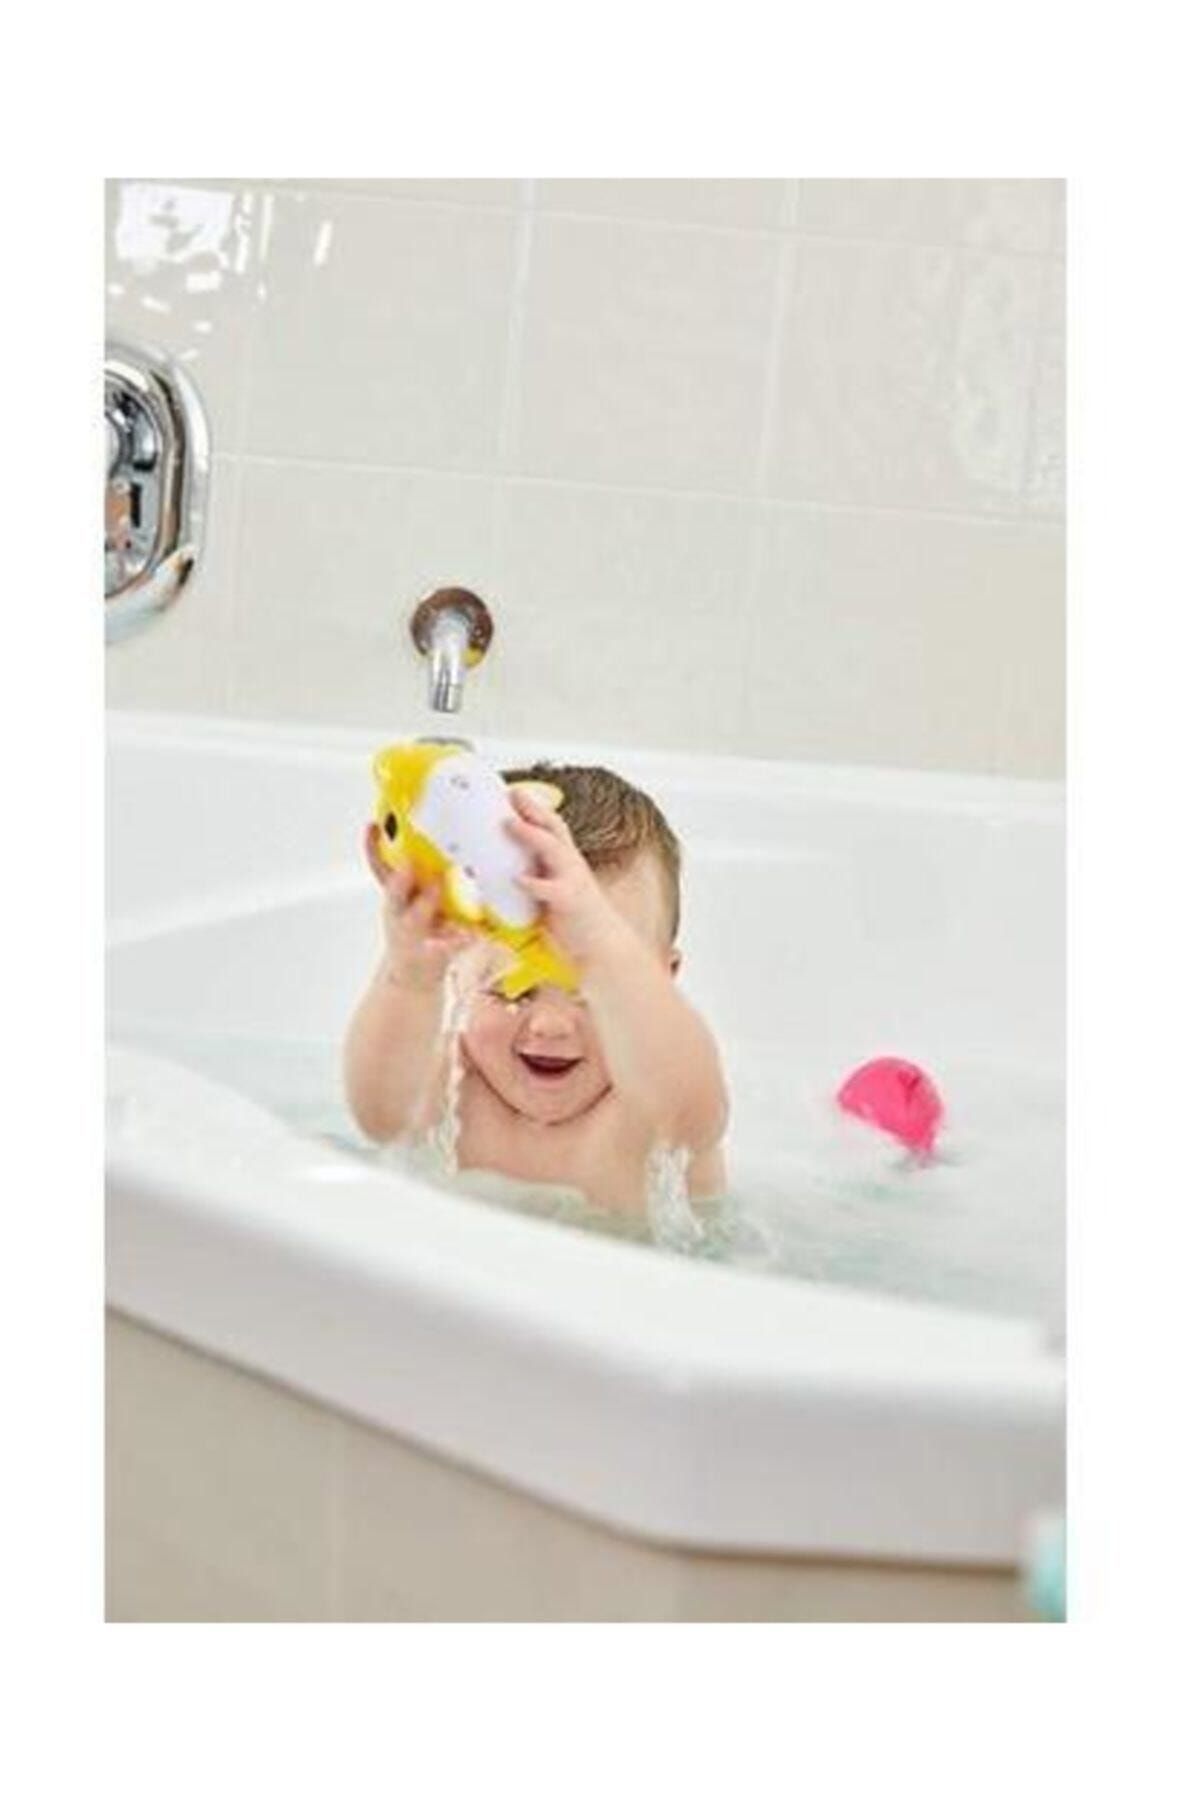 GIOCHI PREZIOSI Baby Shark Floating and Sound Figure Bath Toy Blue -  Trendyol